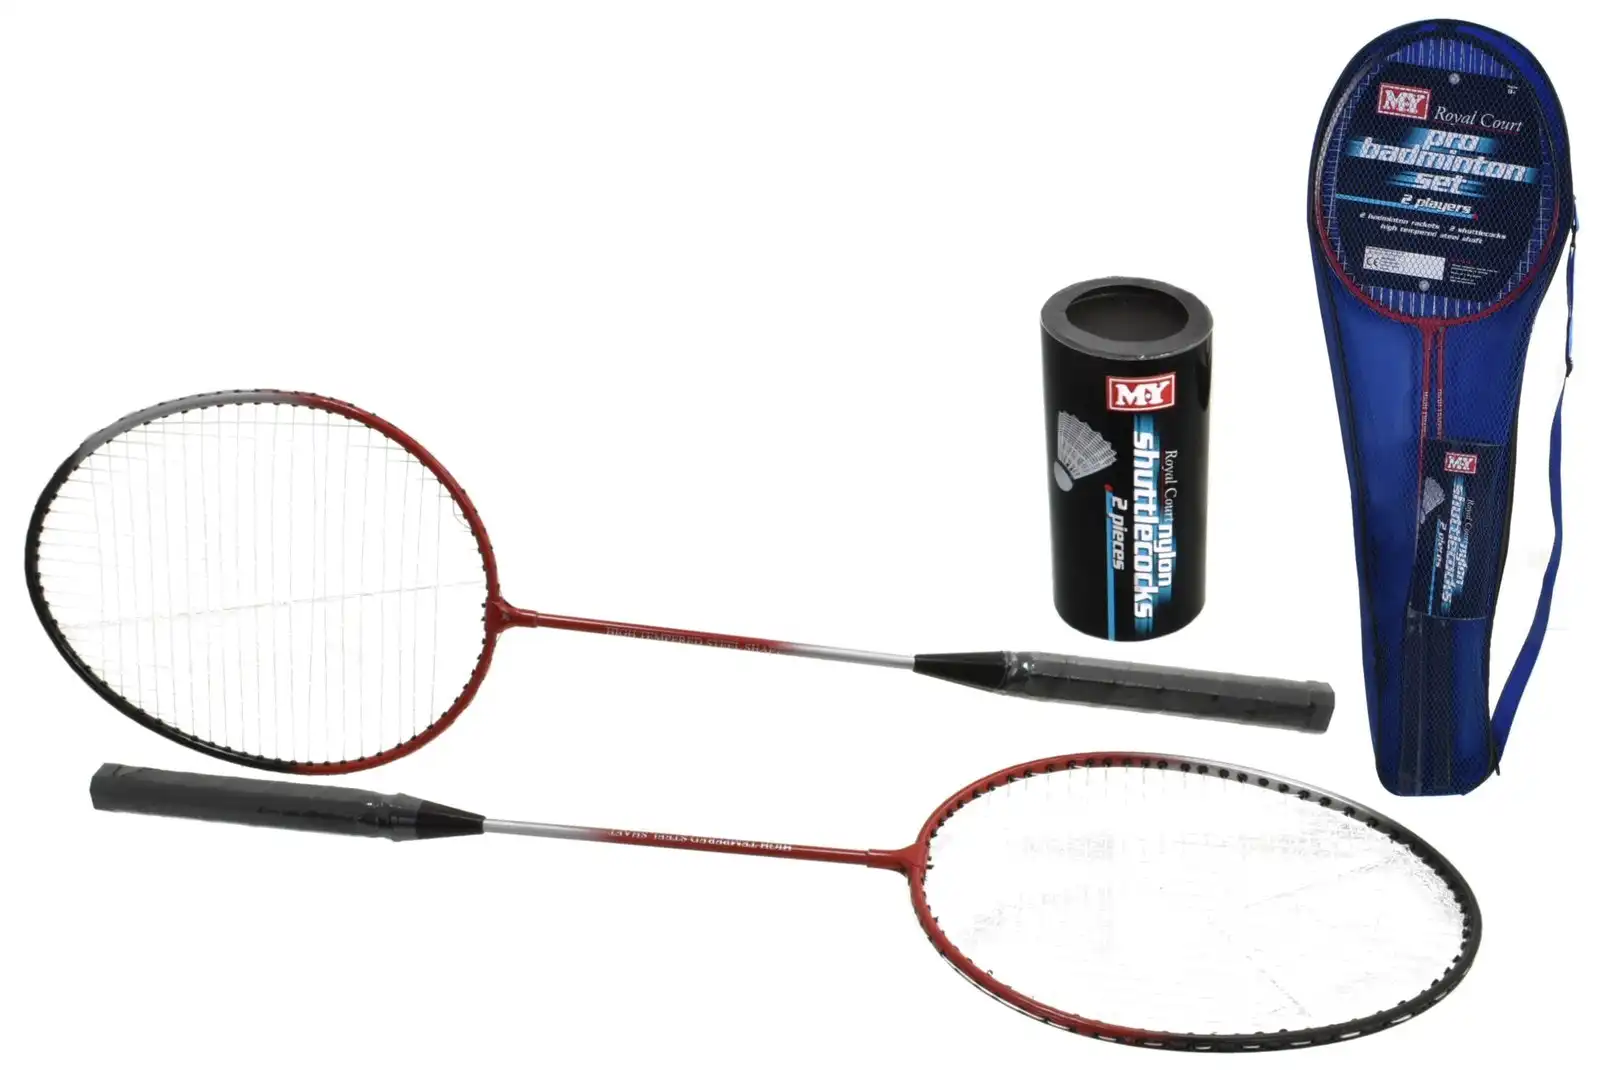 Pro Badminton Set for 2 Players